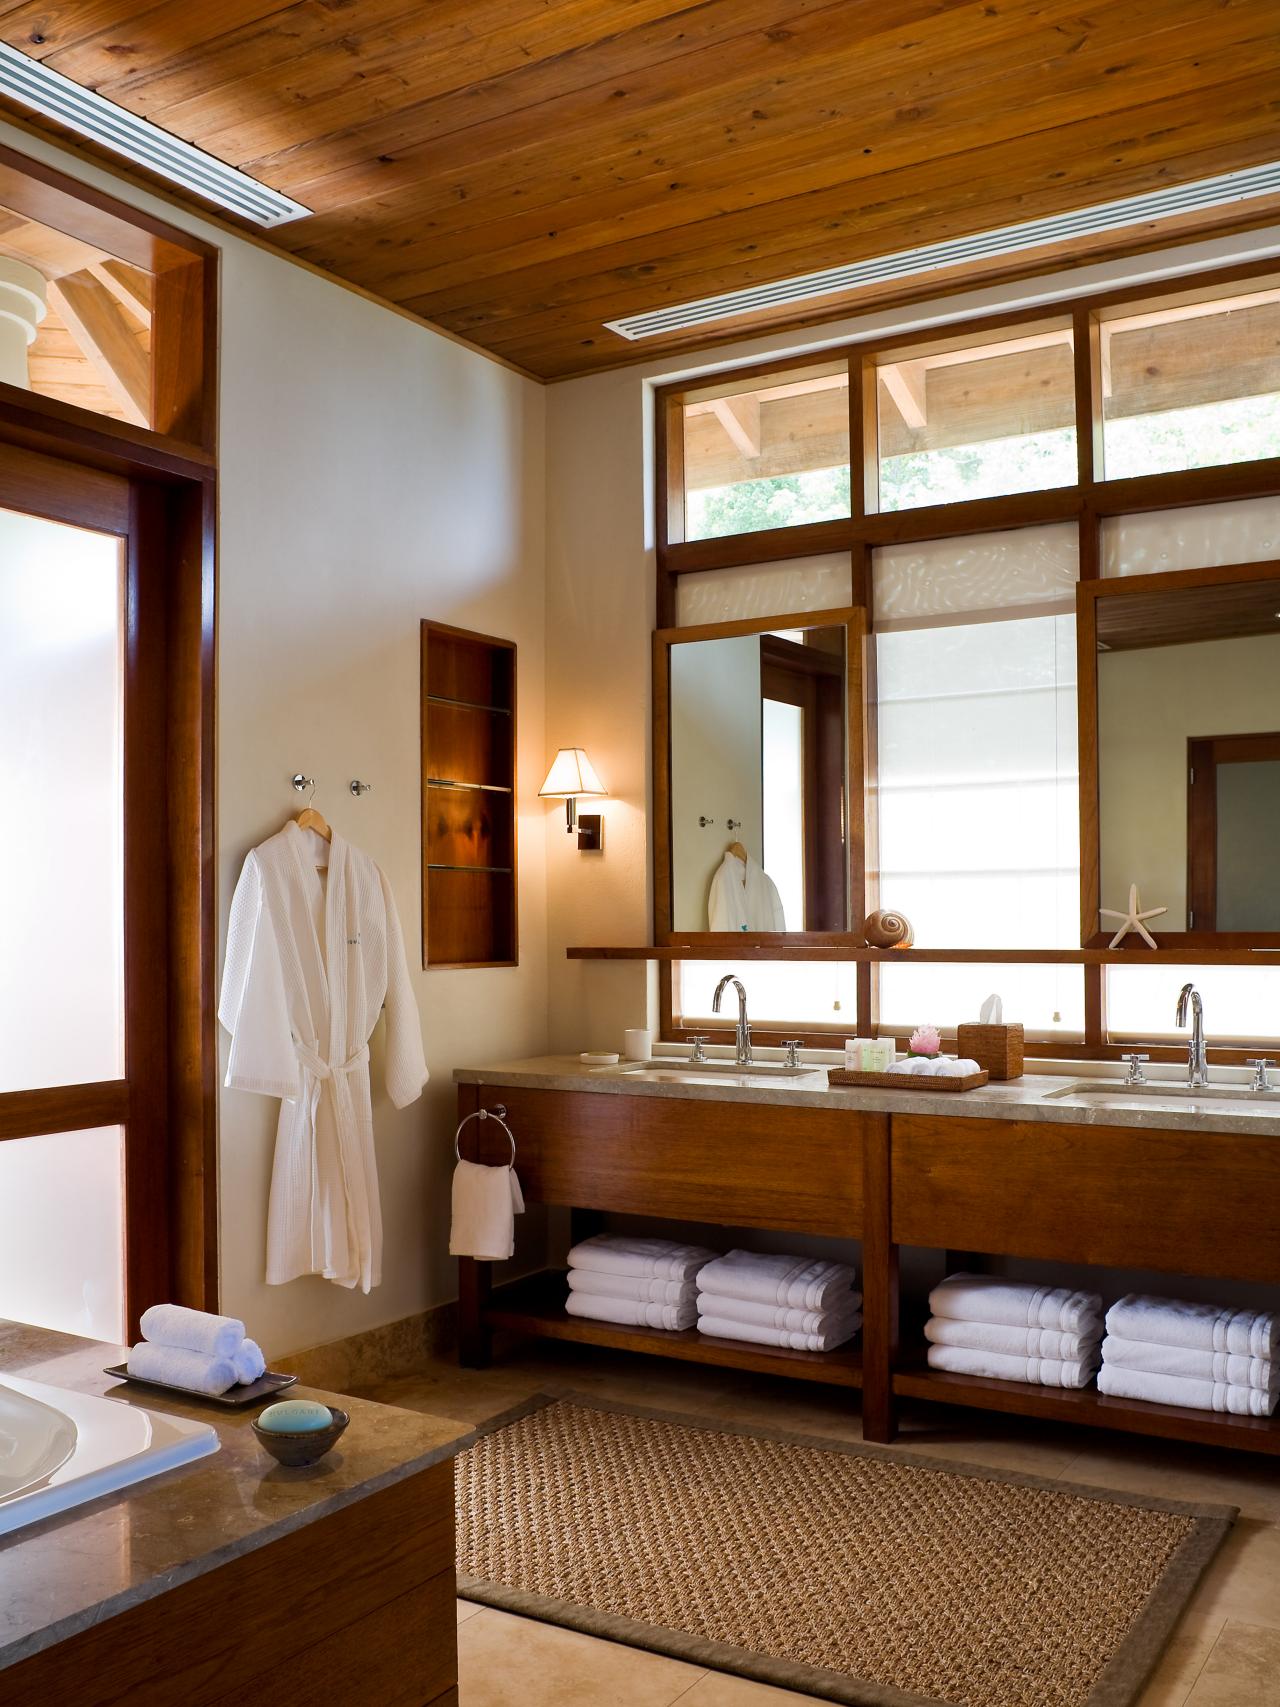 Spa-Like Double Vanity Bathroom With Wood Plank Ceiling | HGTV